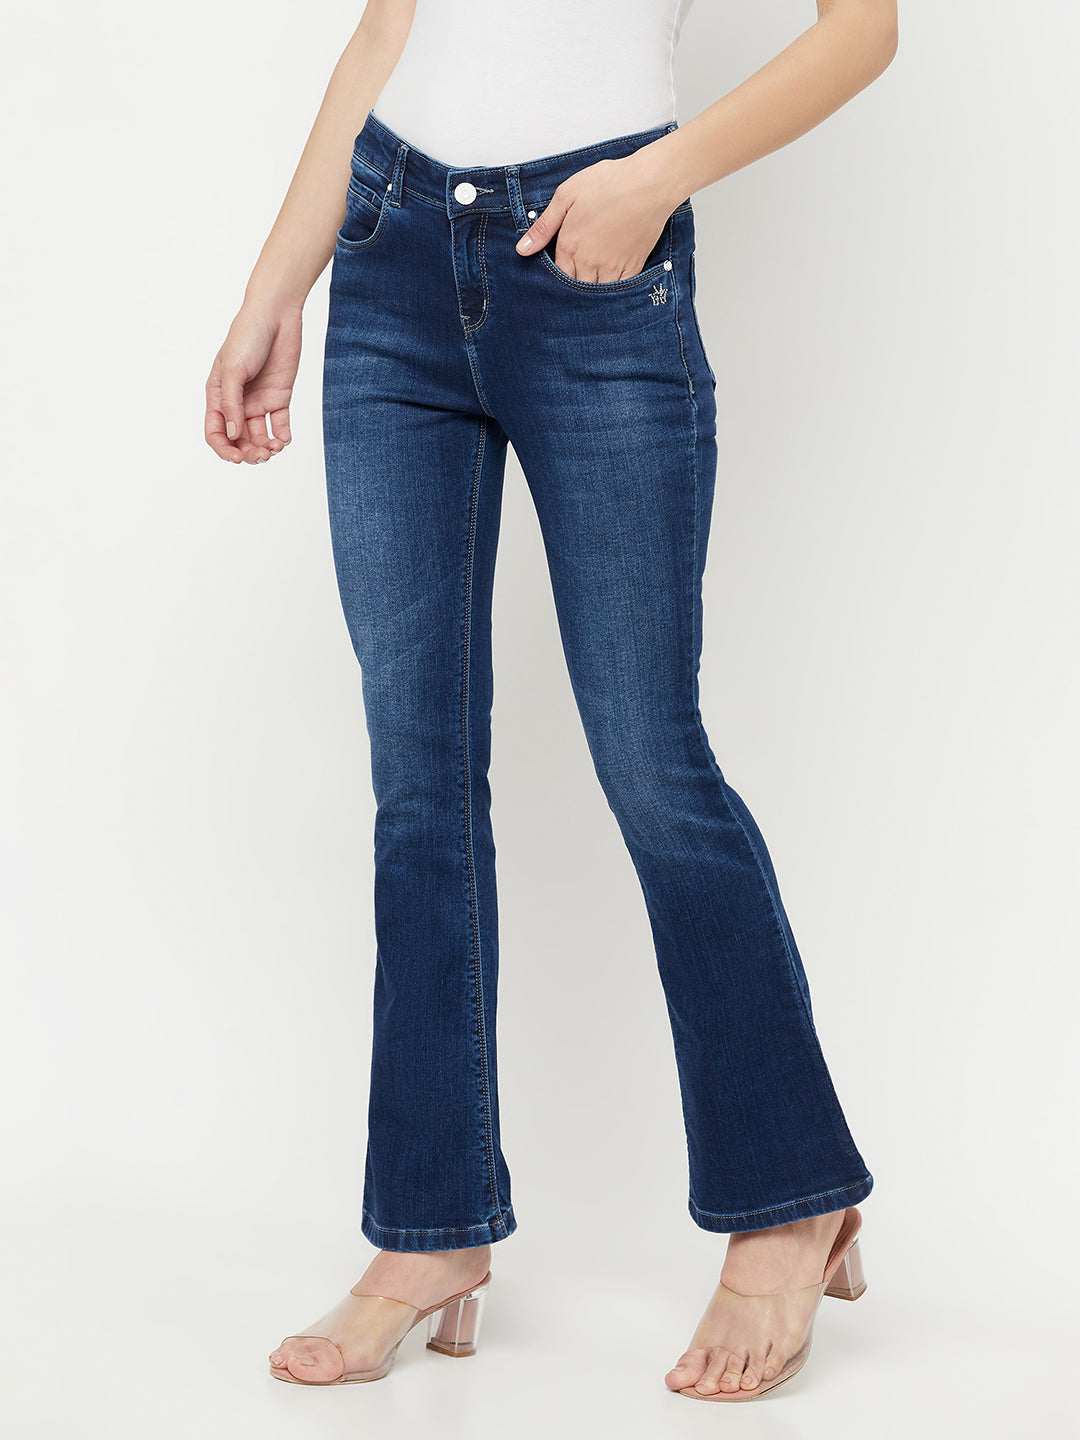 Blue Light Fade Bootcut Jeans - Women Jeans